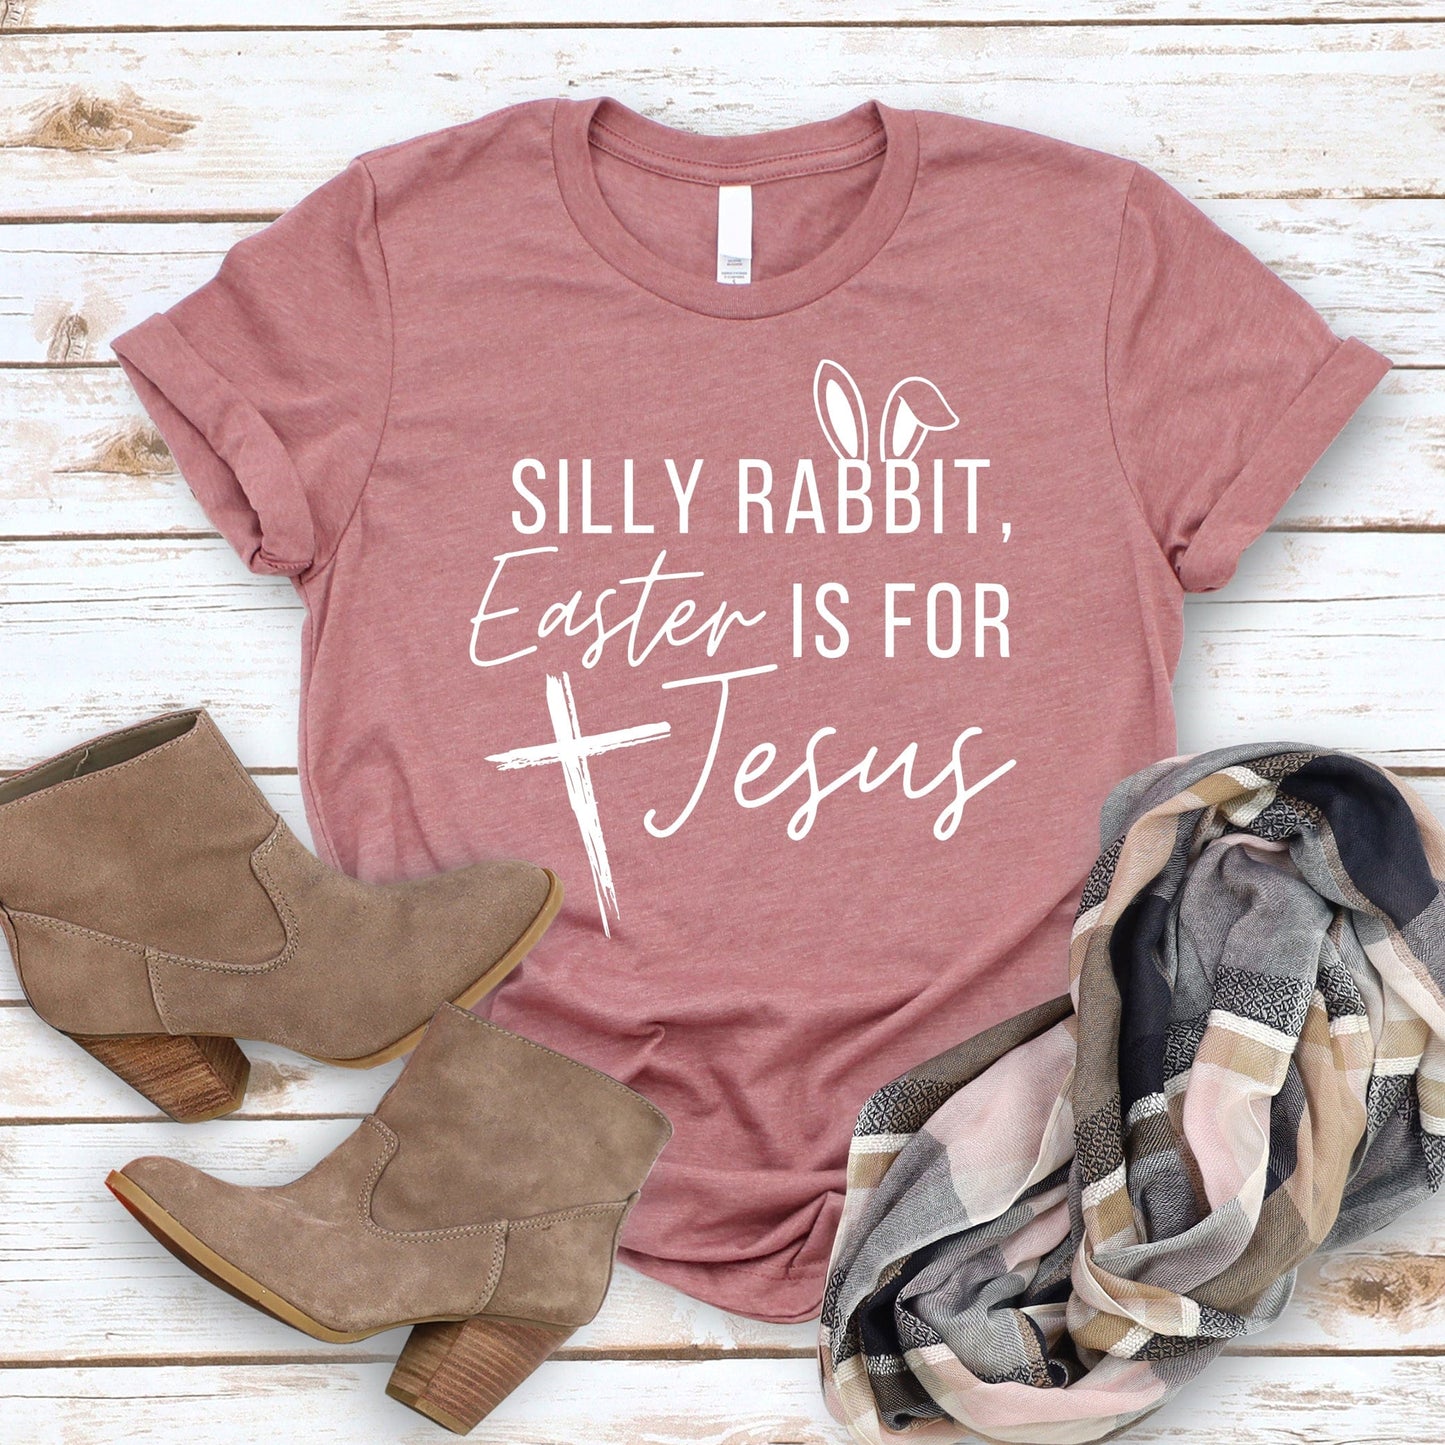 Silly Rabbit T Shirts For Women - Women's Christian T Shirts - Women's Religious Shirts